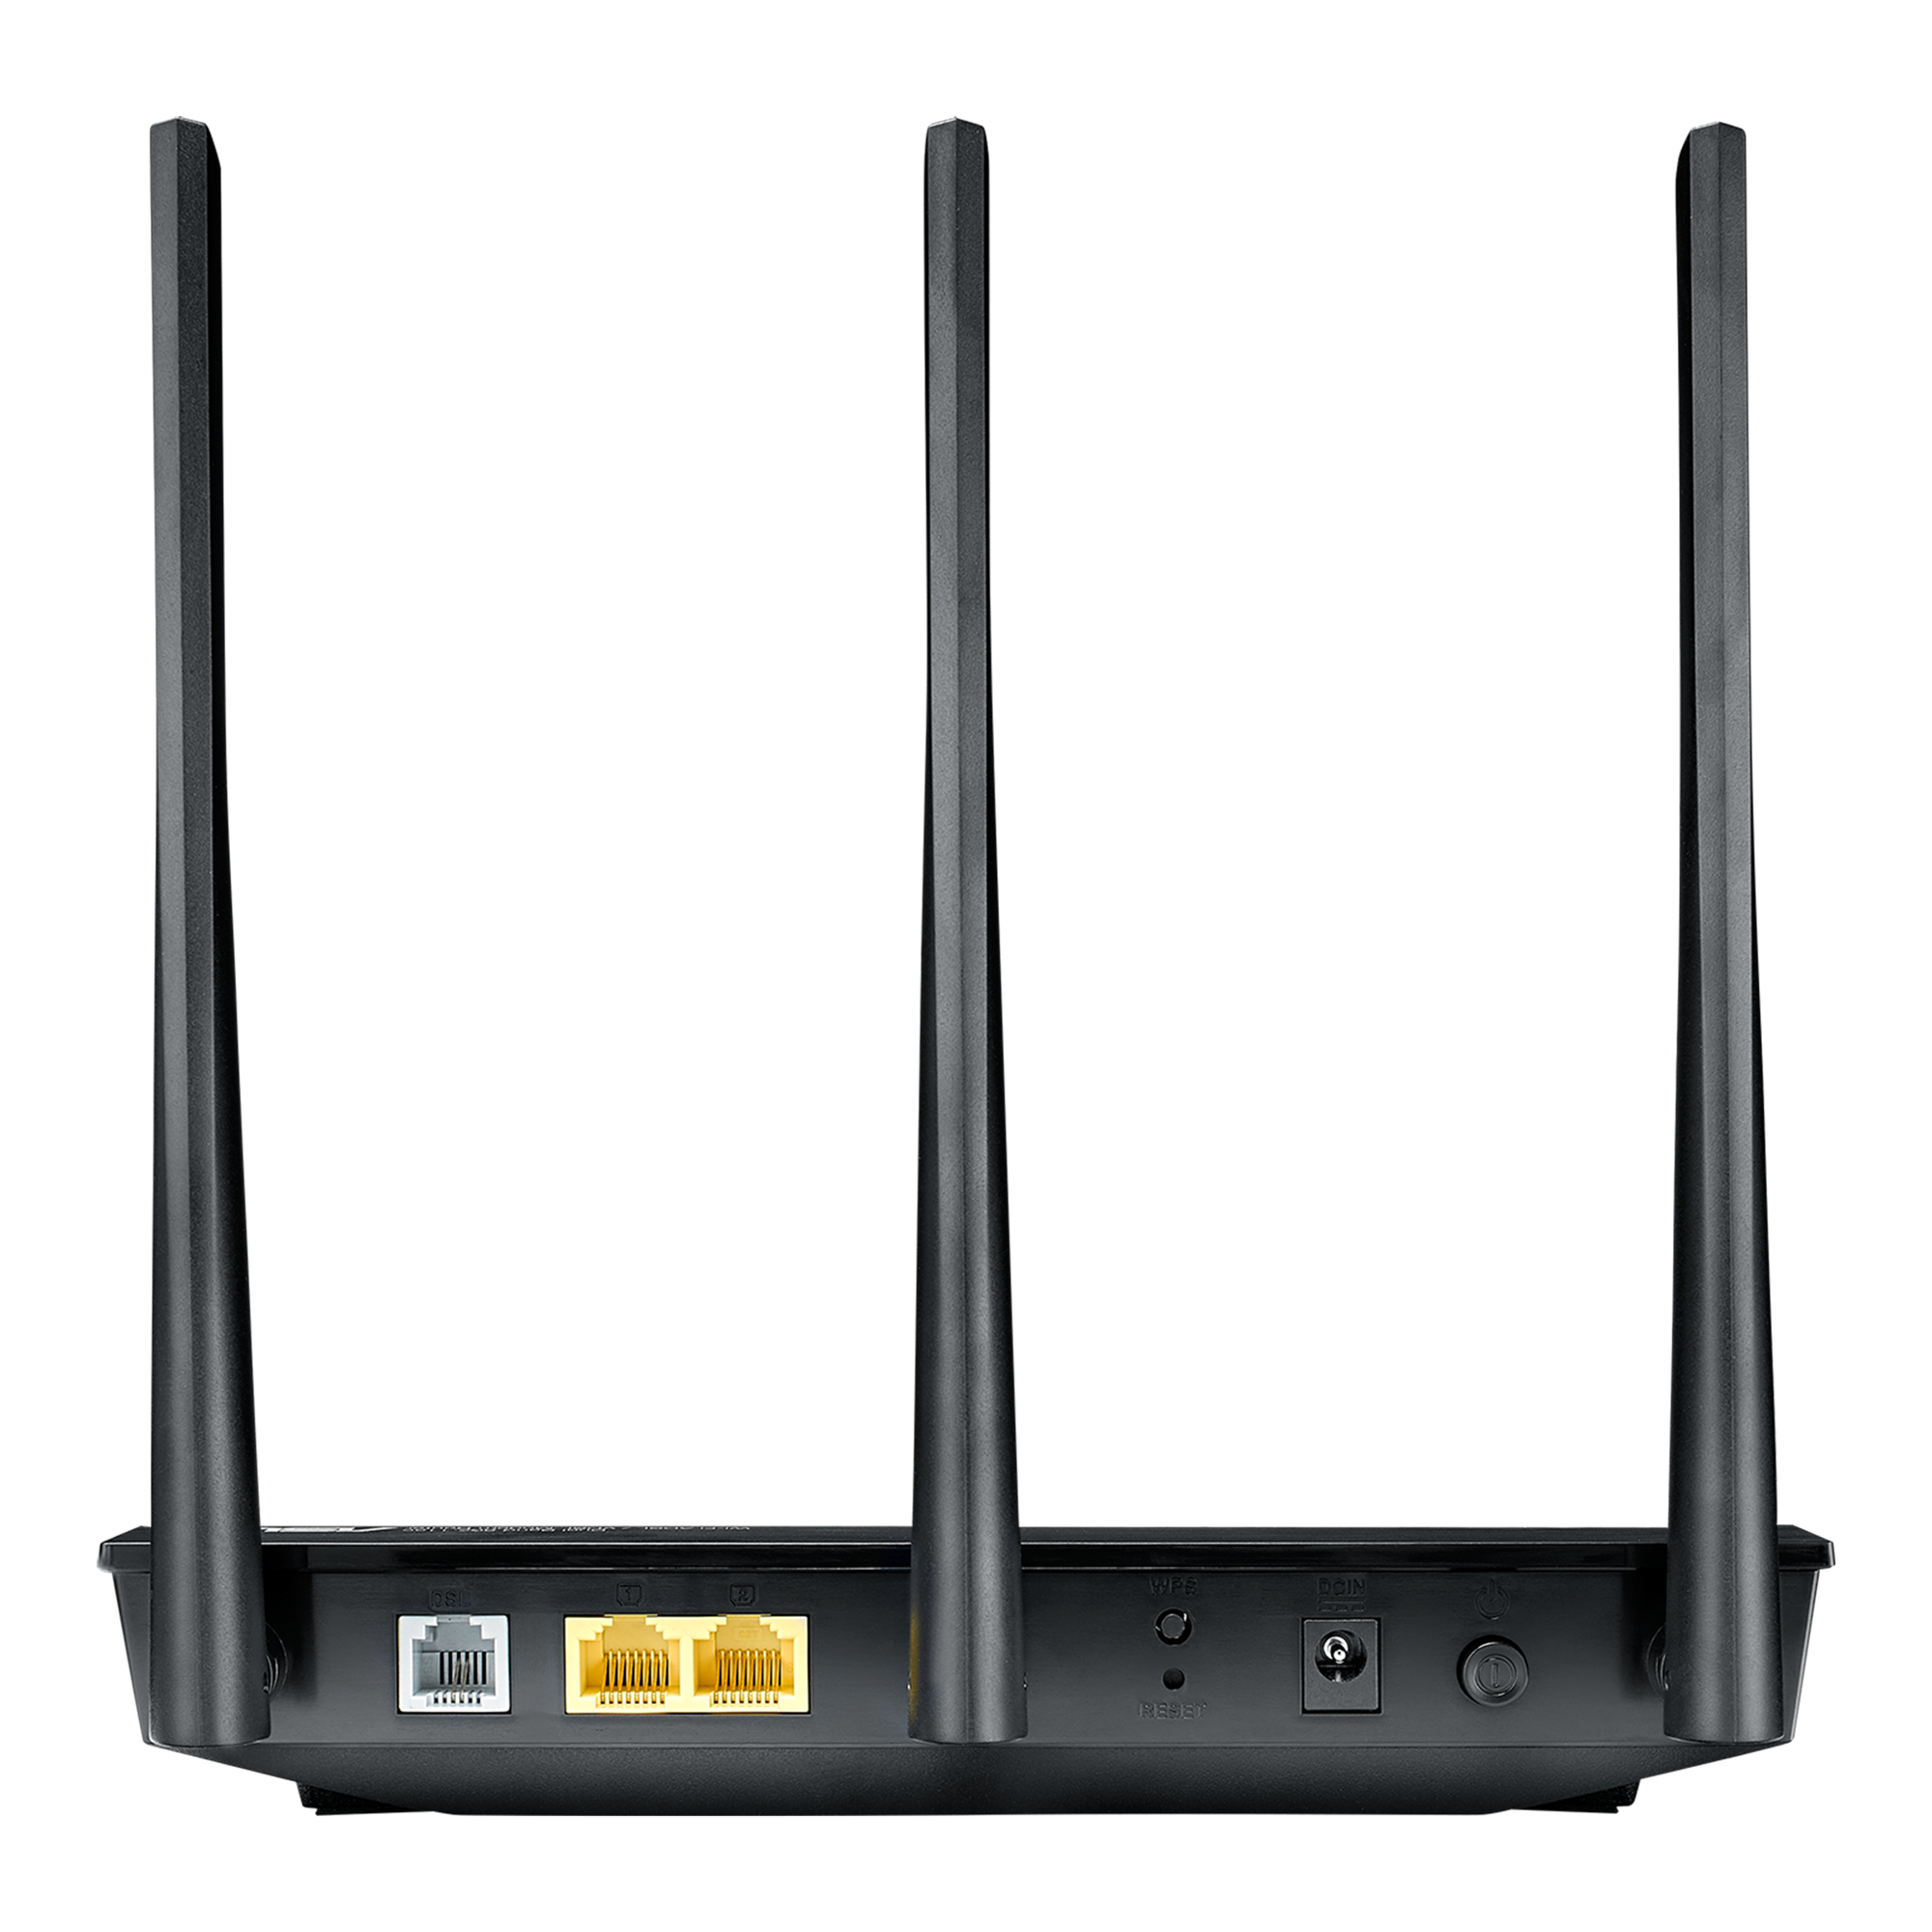 DSL-AC750｜Modem Routers｜ASUS Global